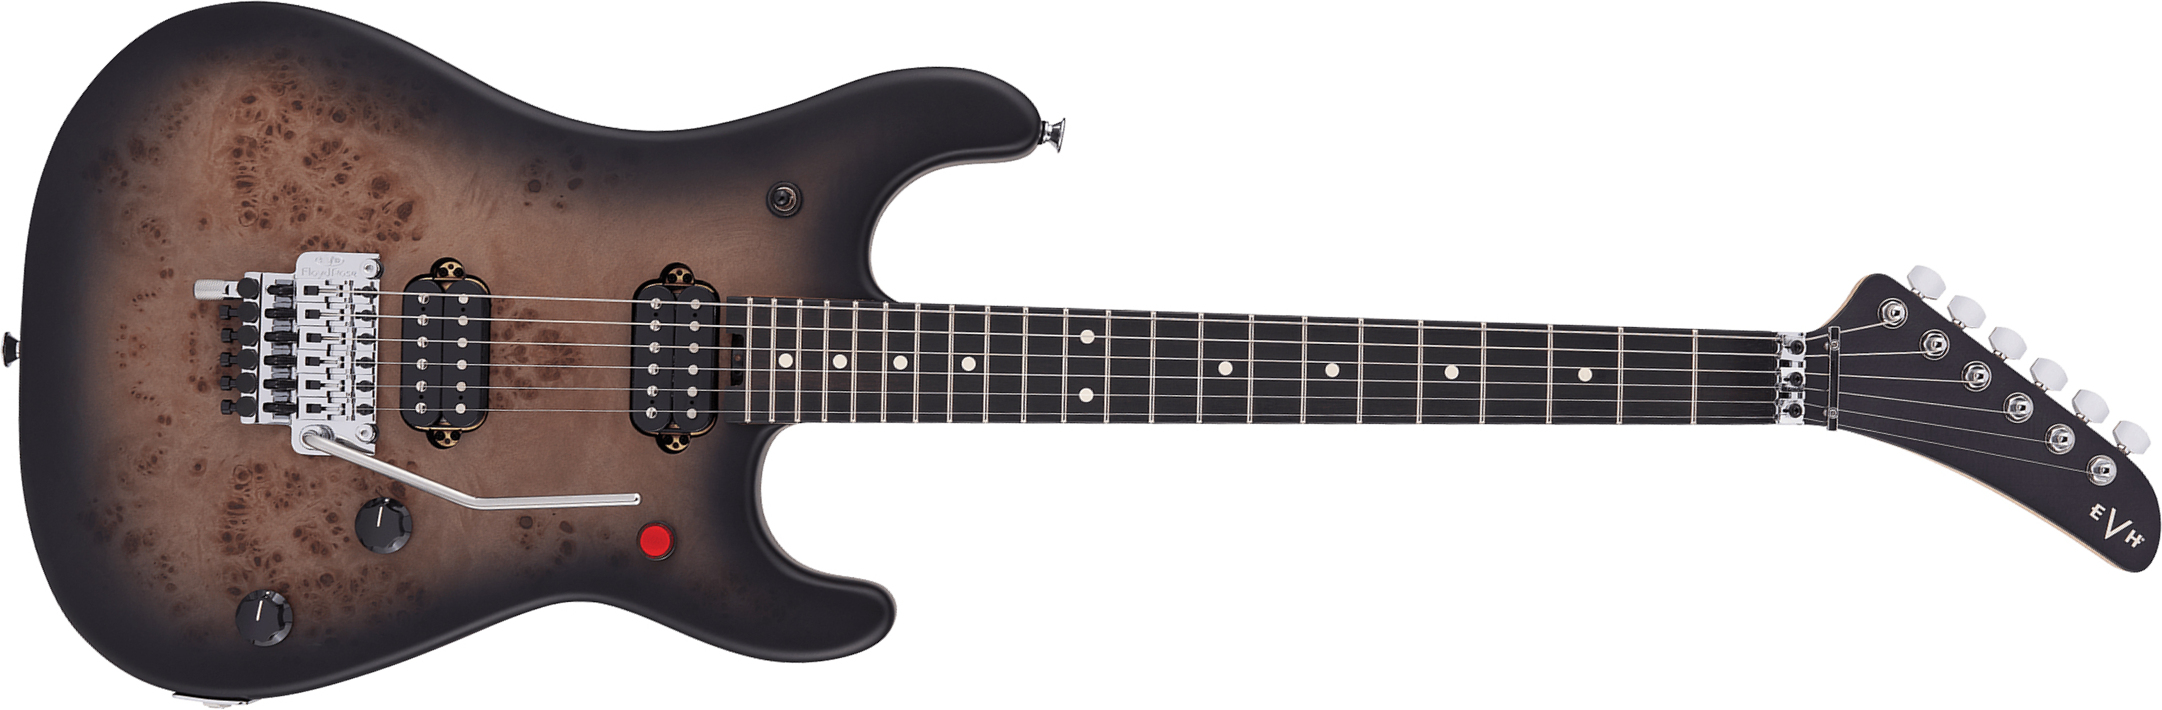 Evh 5150 Deluxe Poplar Burl Mex 2h Fr Eb - Black Burst - Str shape electric guitar - Main picture